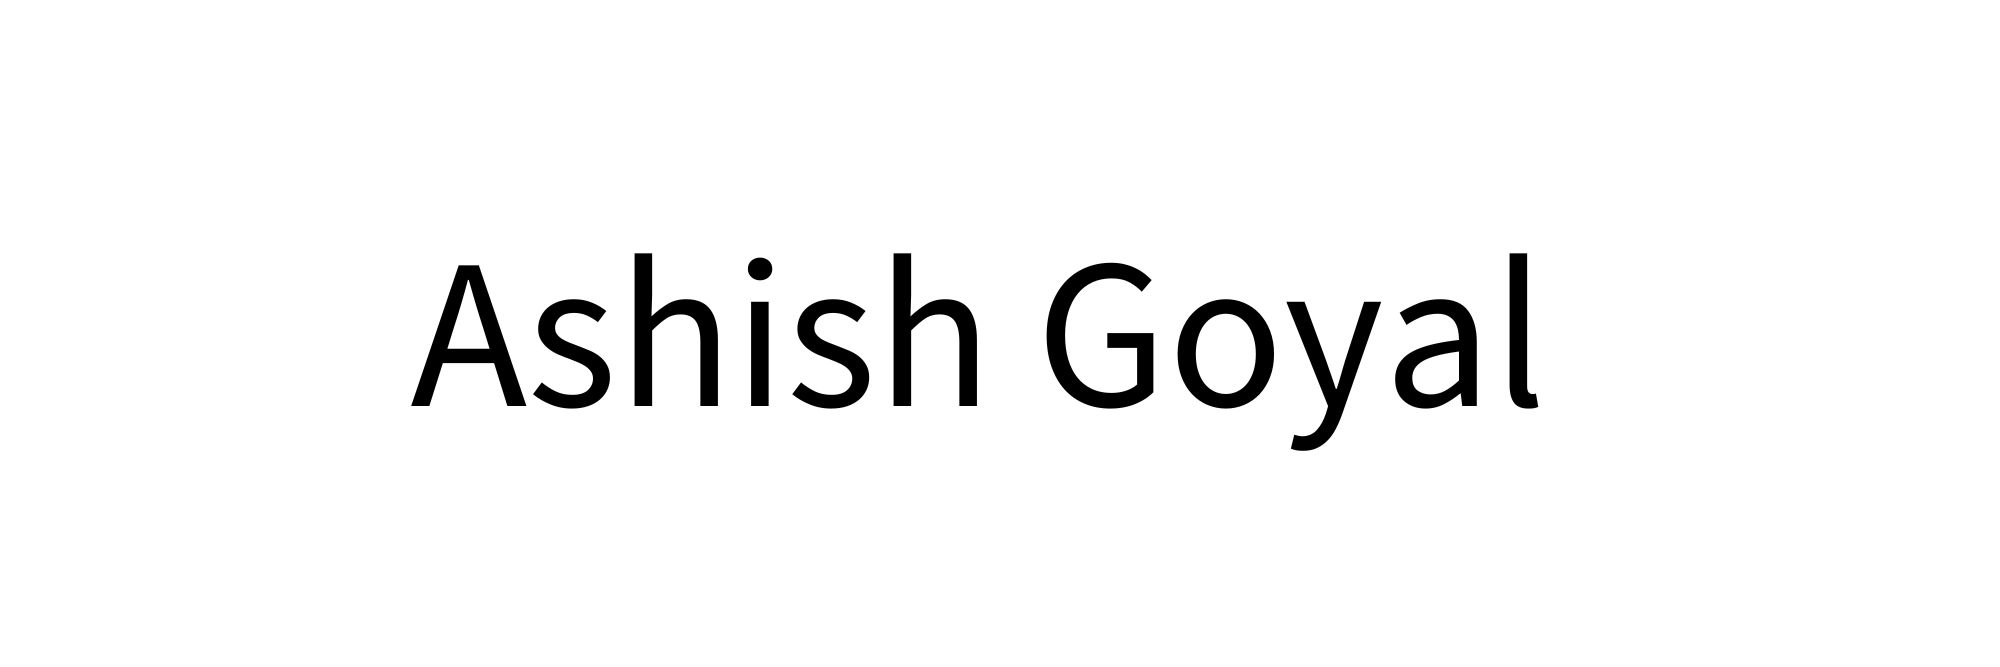 Ashish Goyal 